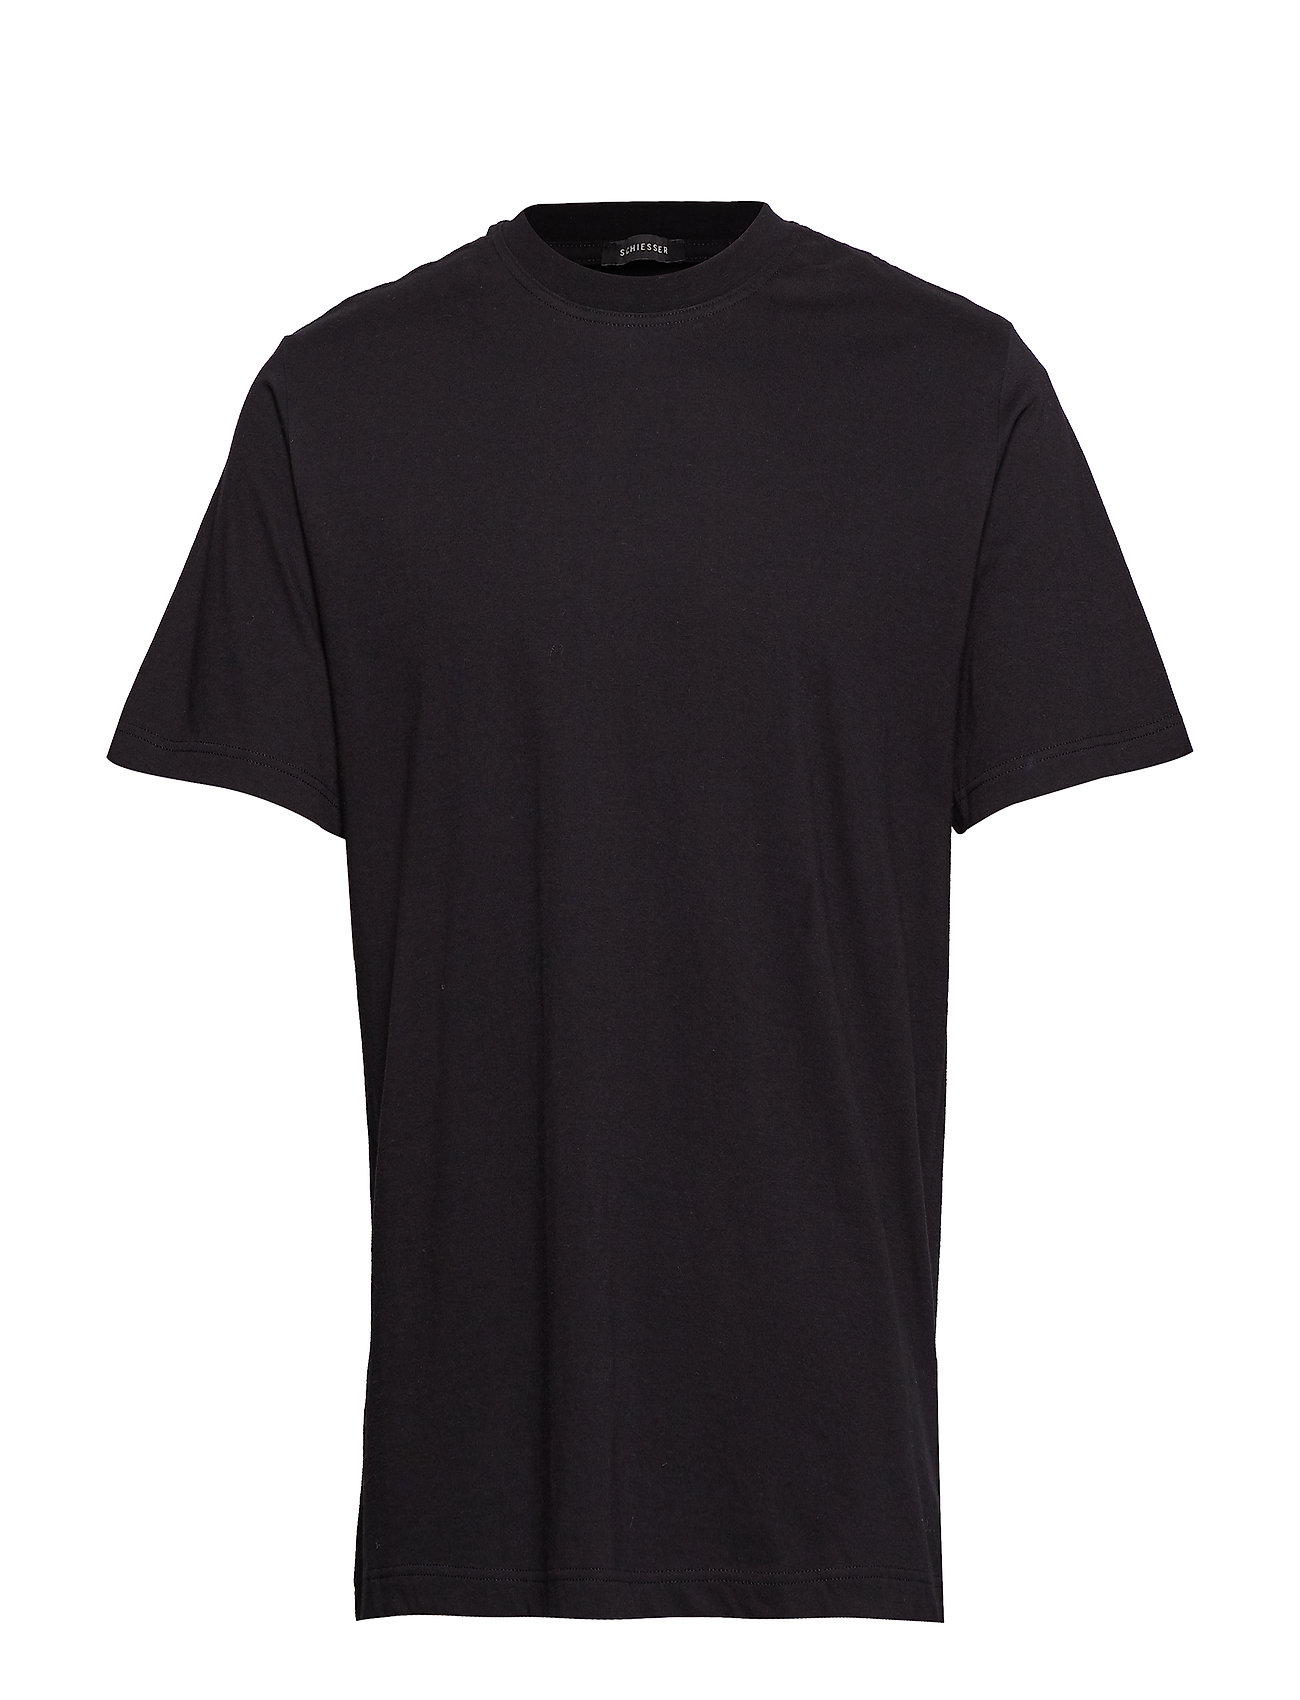 Schiesser - Shirt 1/2 - kurzärmelig - black - 1